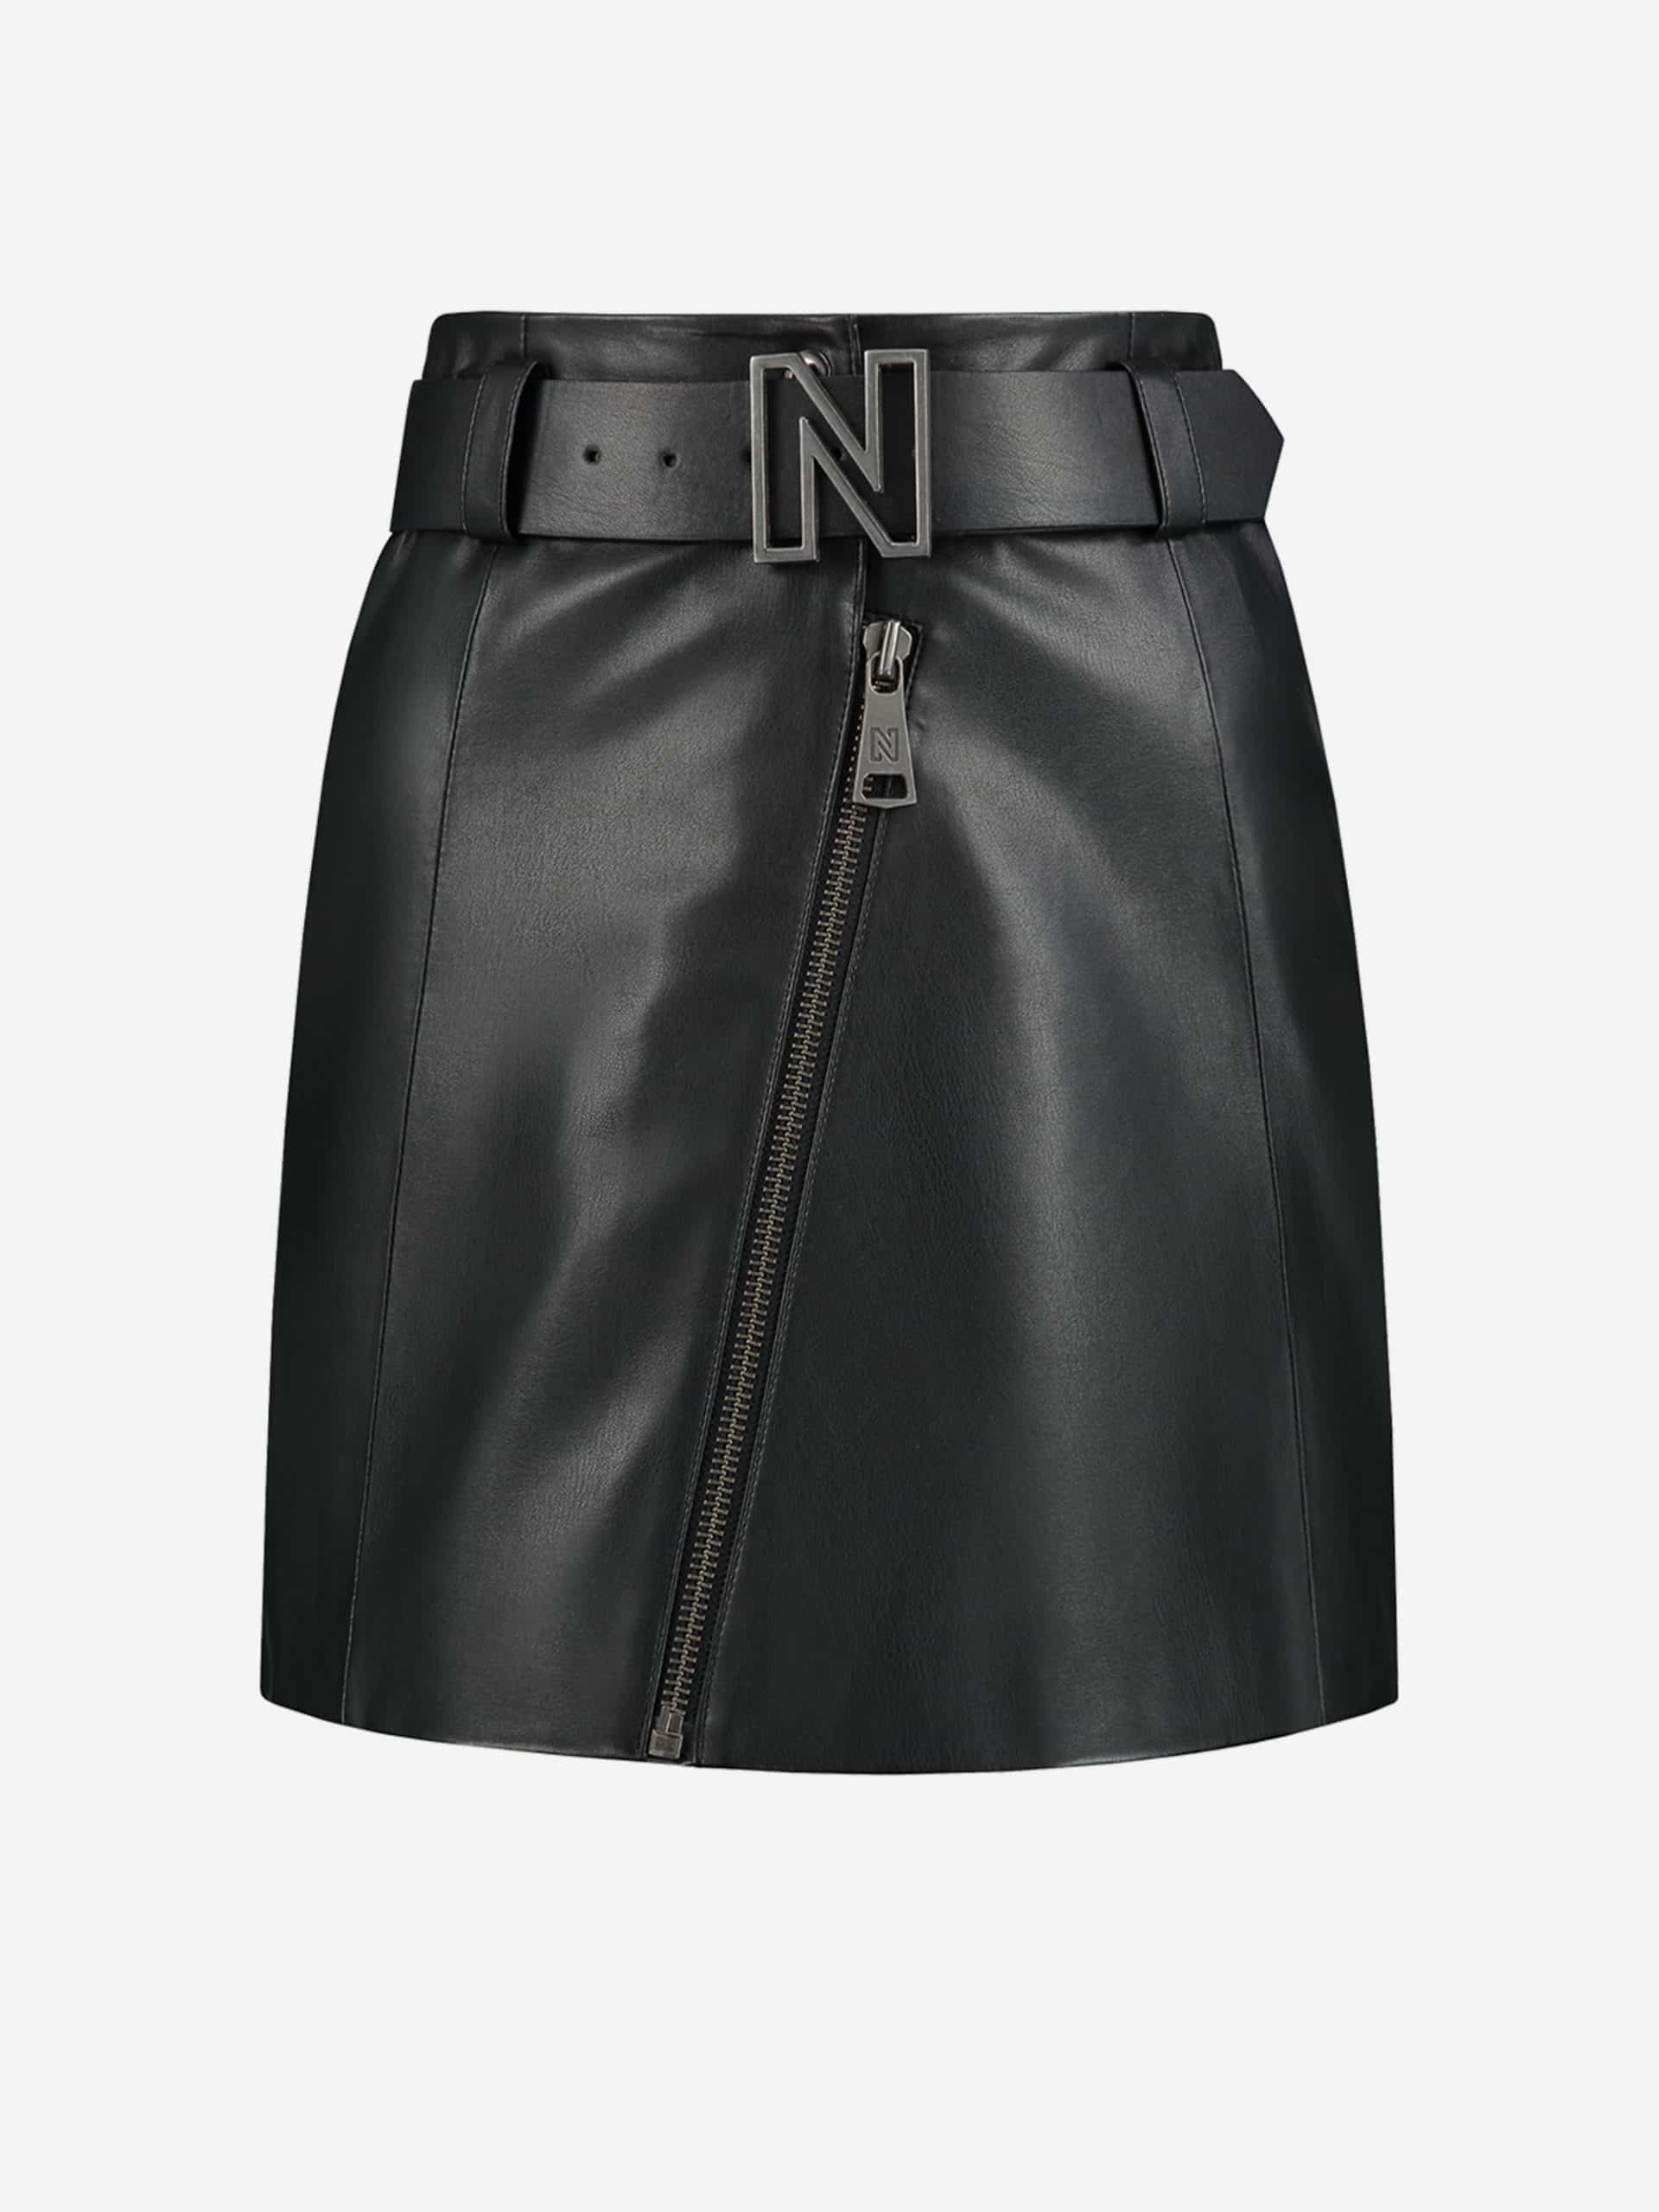 Manifesteren Rechthoek boezem Nikkie Vegan leather skirt with N logo belt - Siphra Studio